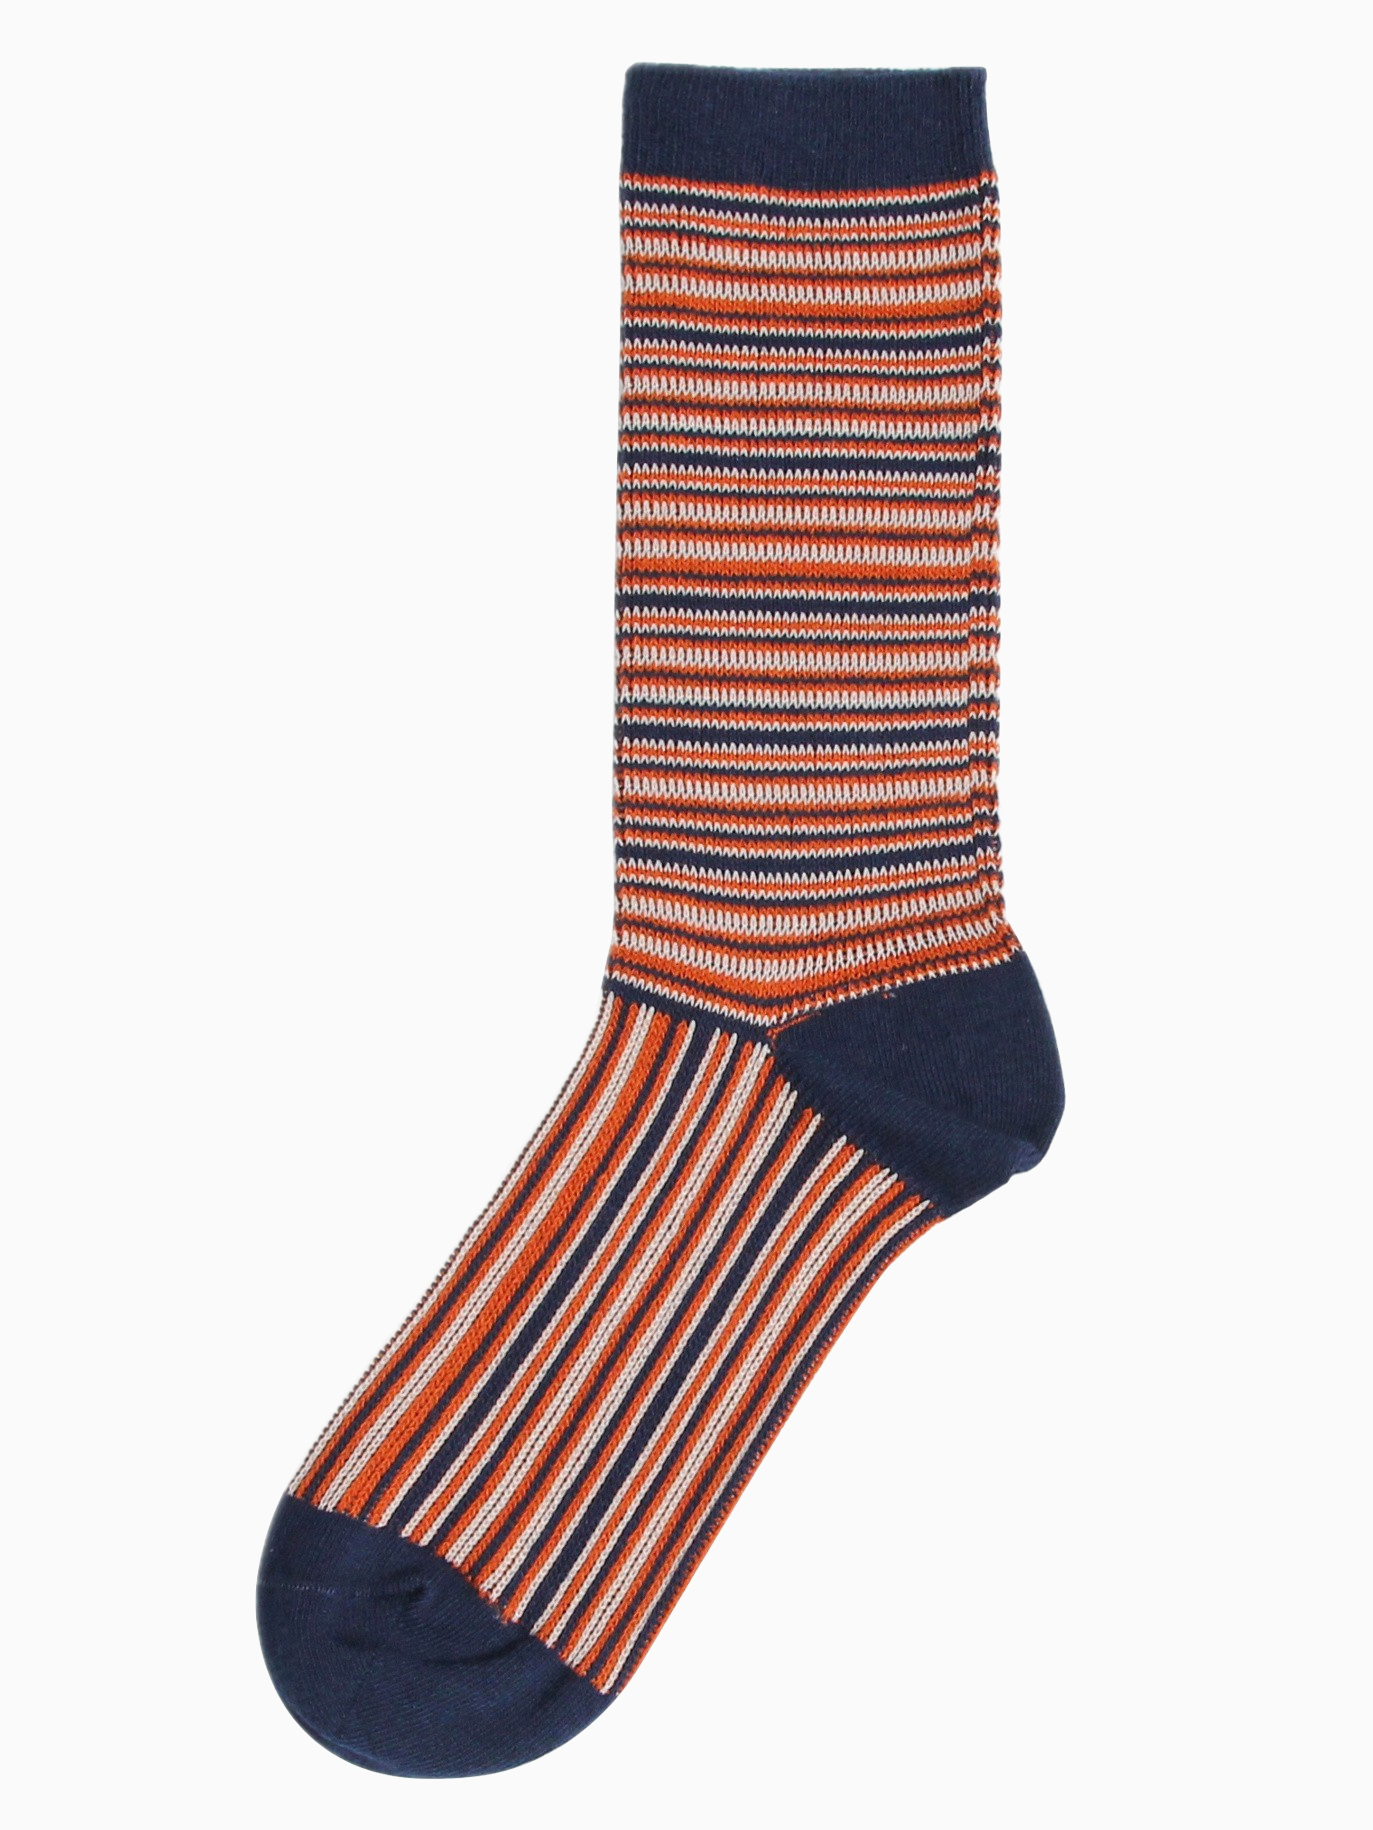 3 Pairs of Patterned Socks | Multi Pack